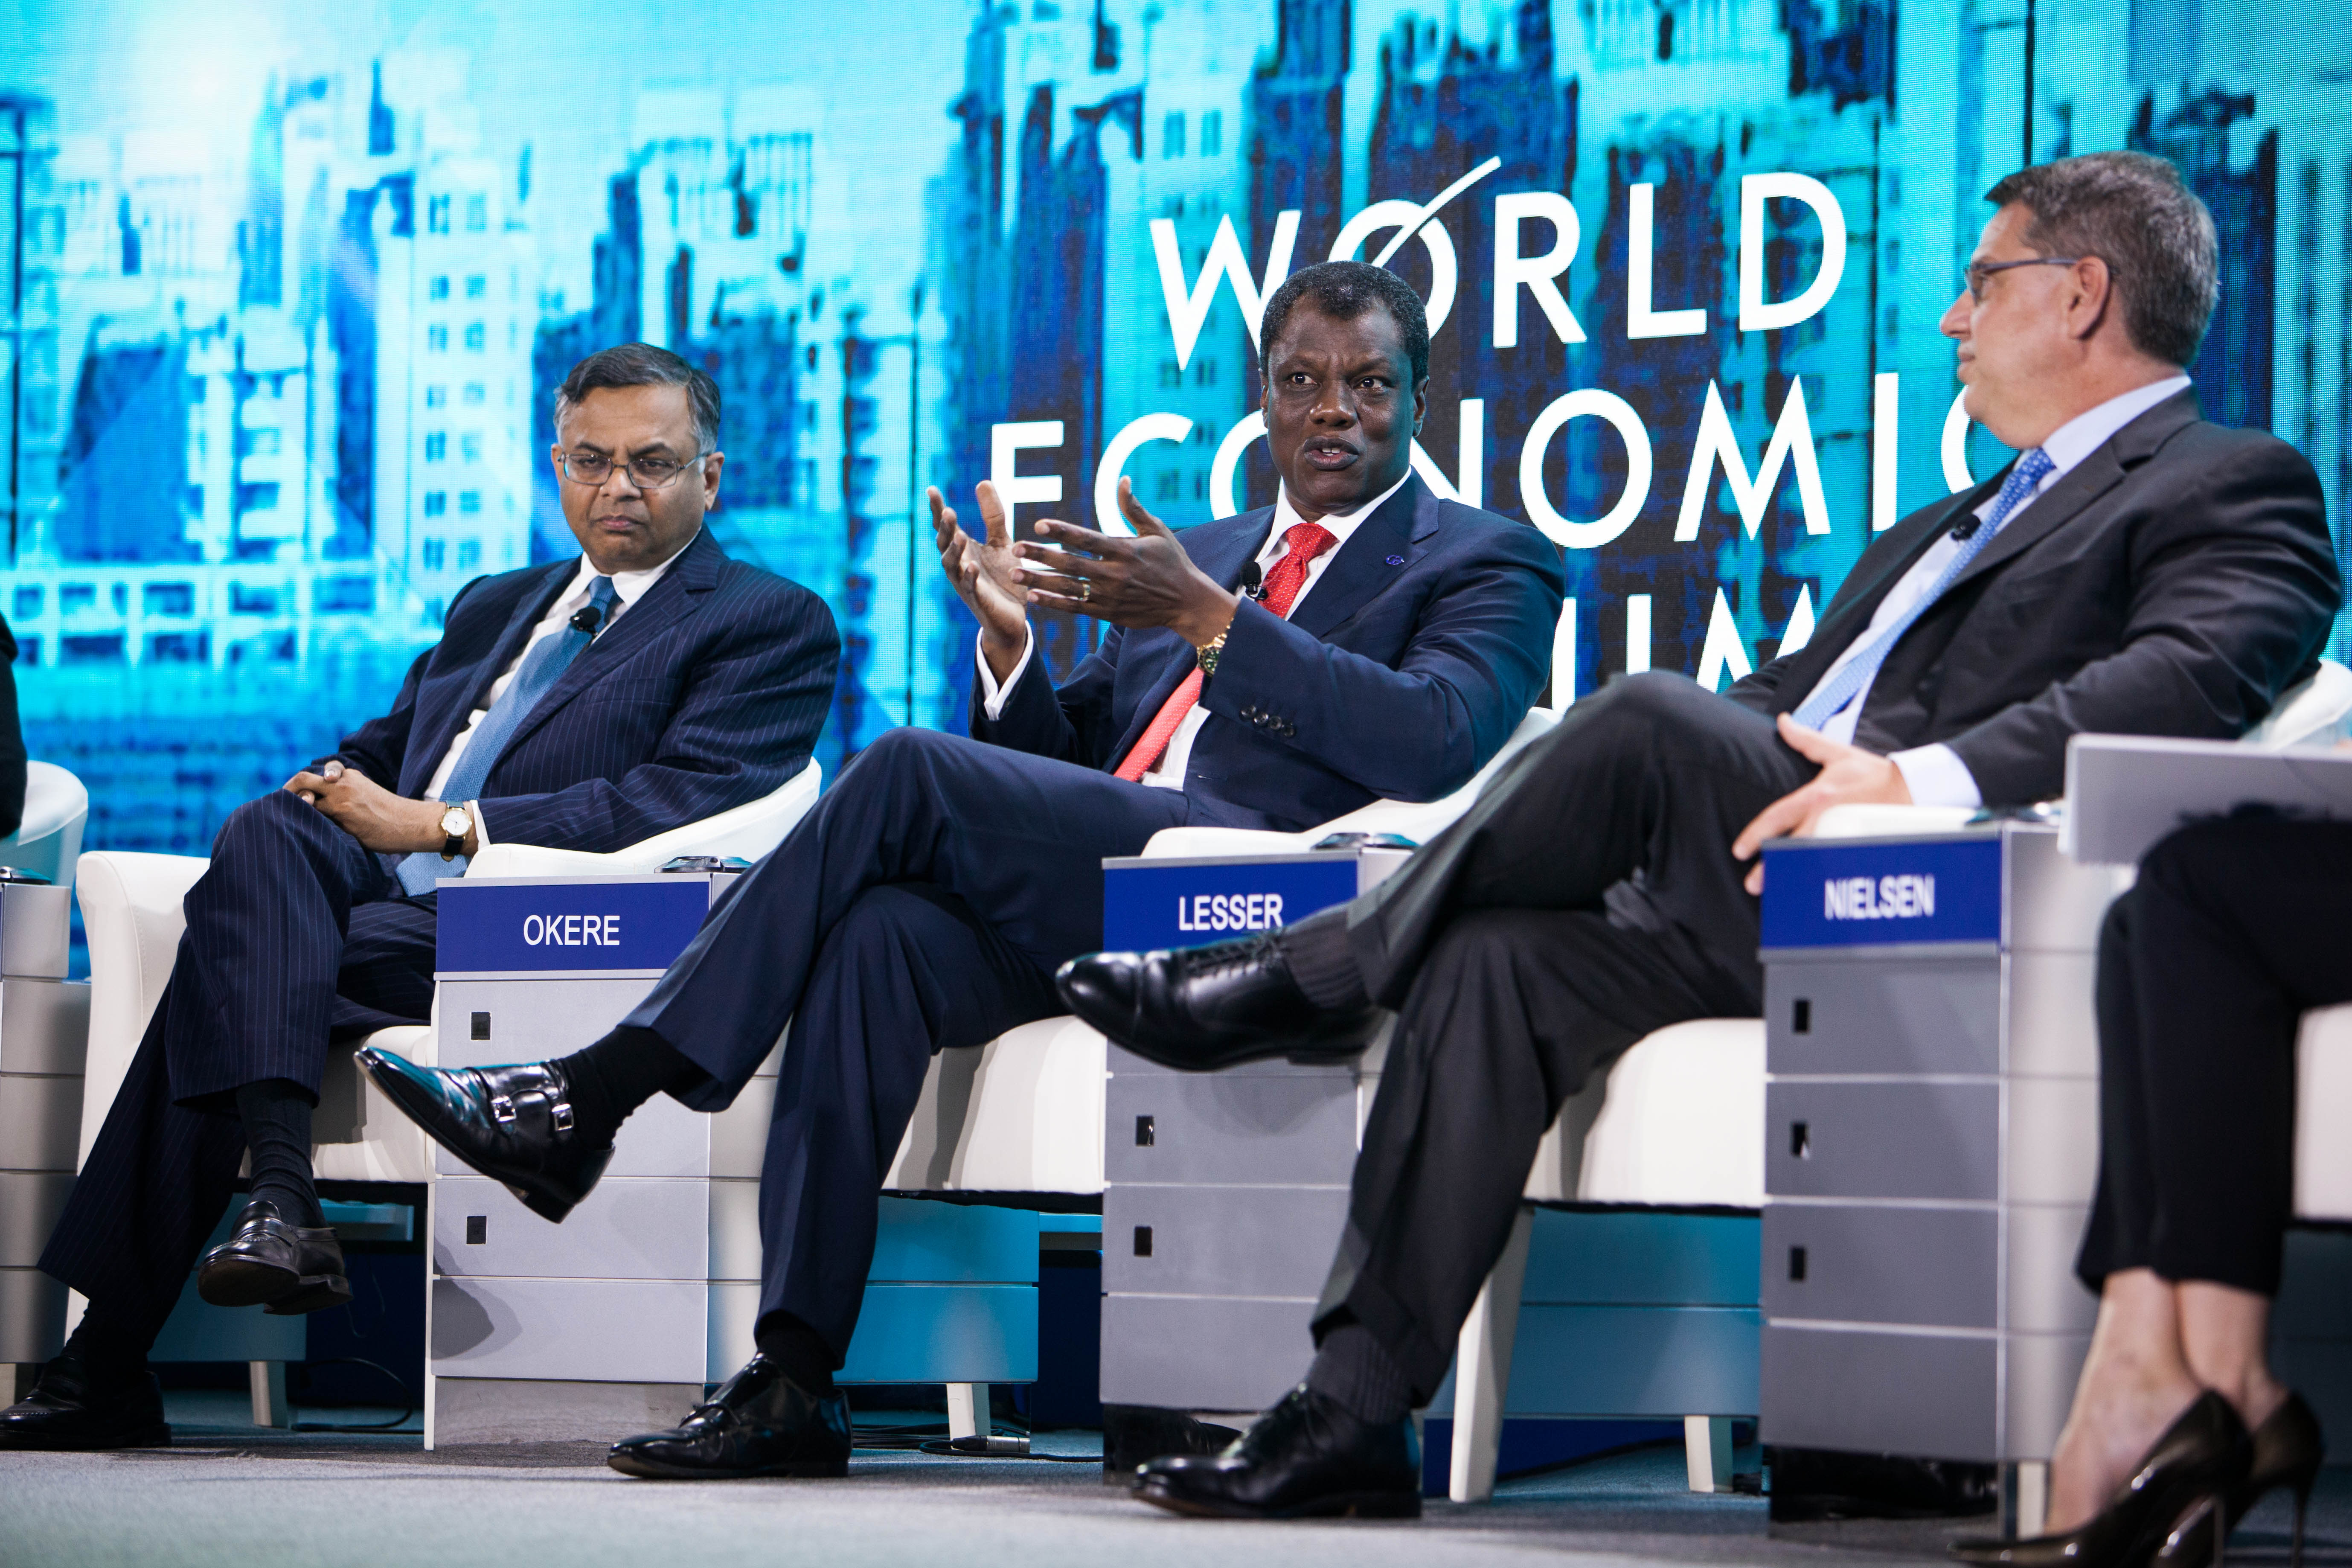 CWG Becomes World Economic Forum Member